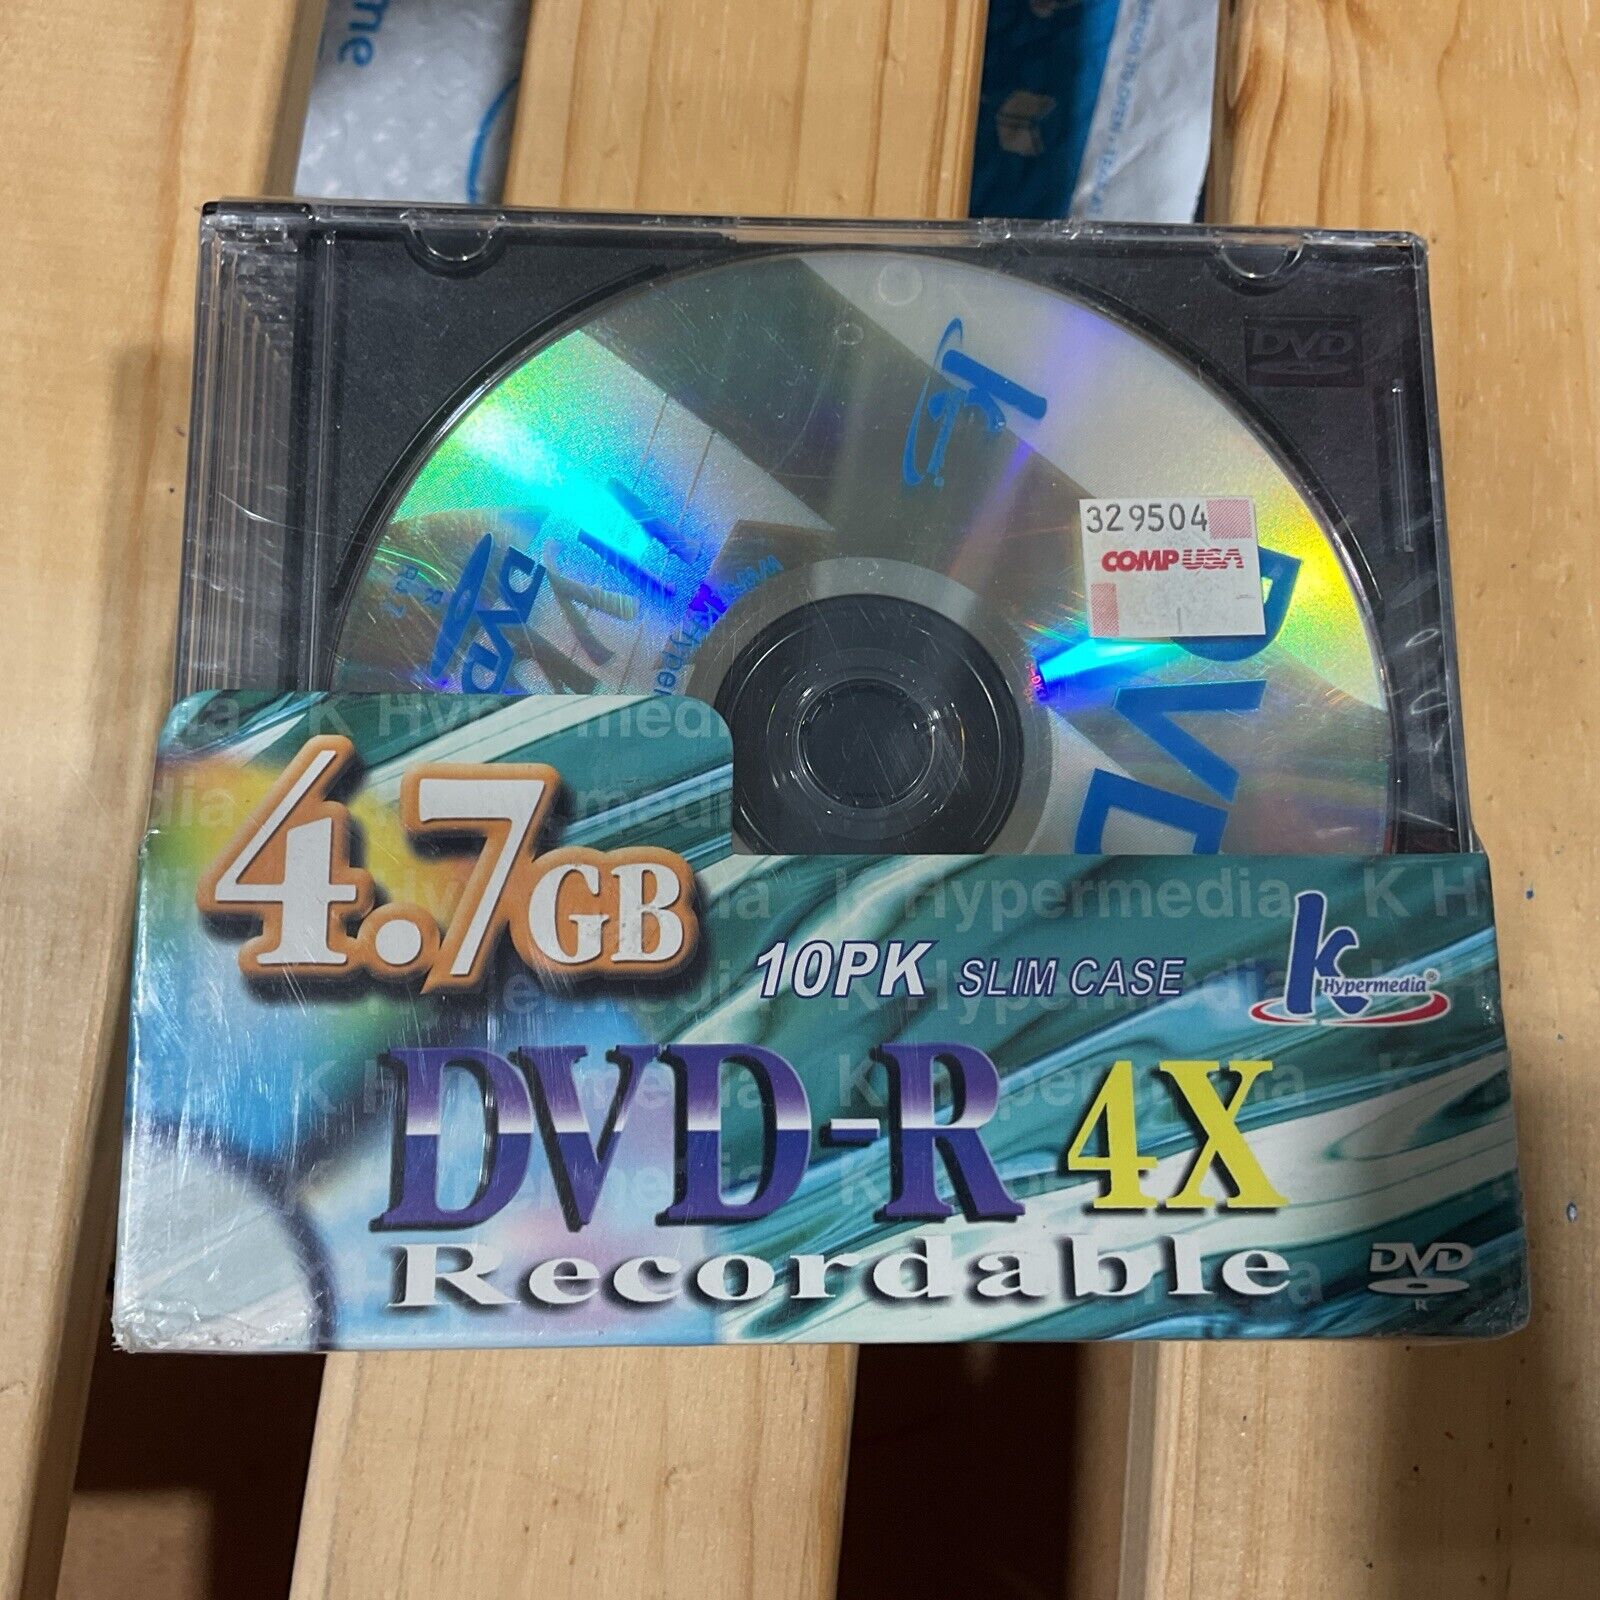 DVD-R 4X RECORDABLE 4.7GB 120 MIN. 10PK Slim Case K Hypermedia New Sealed CDs